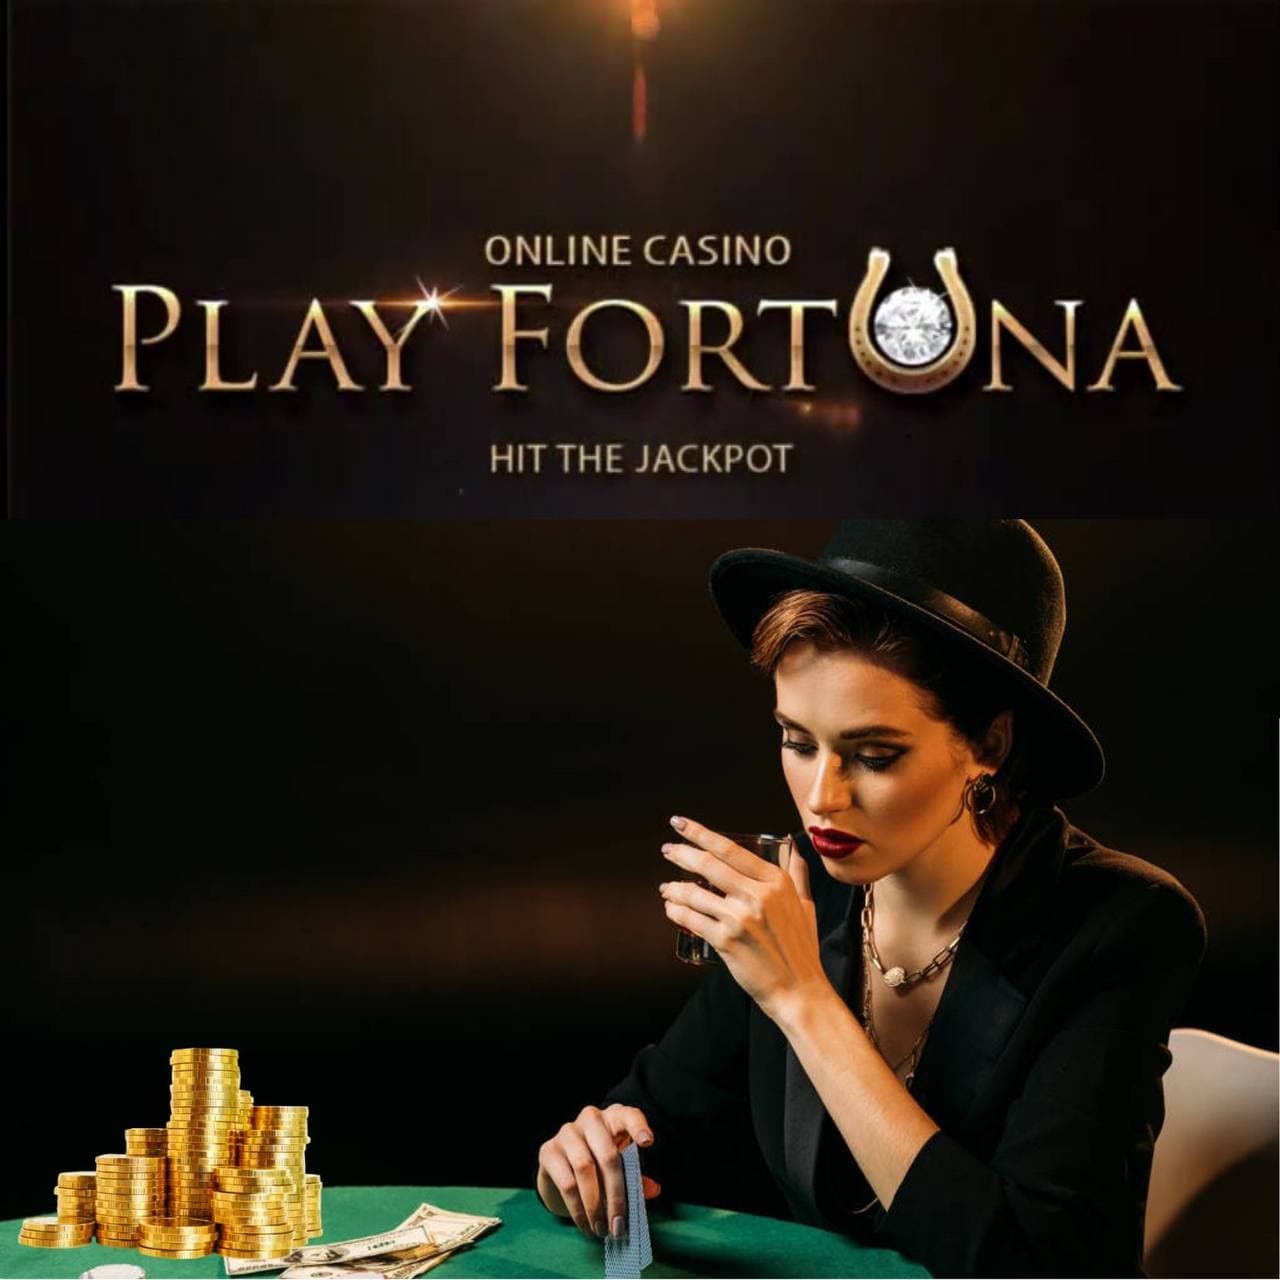 Play fortuna зеркало на сегодня playfortuna777casino